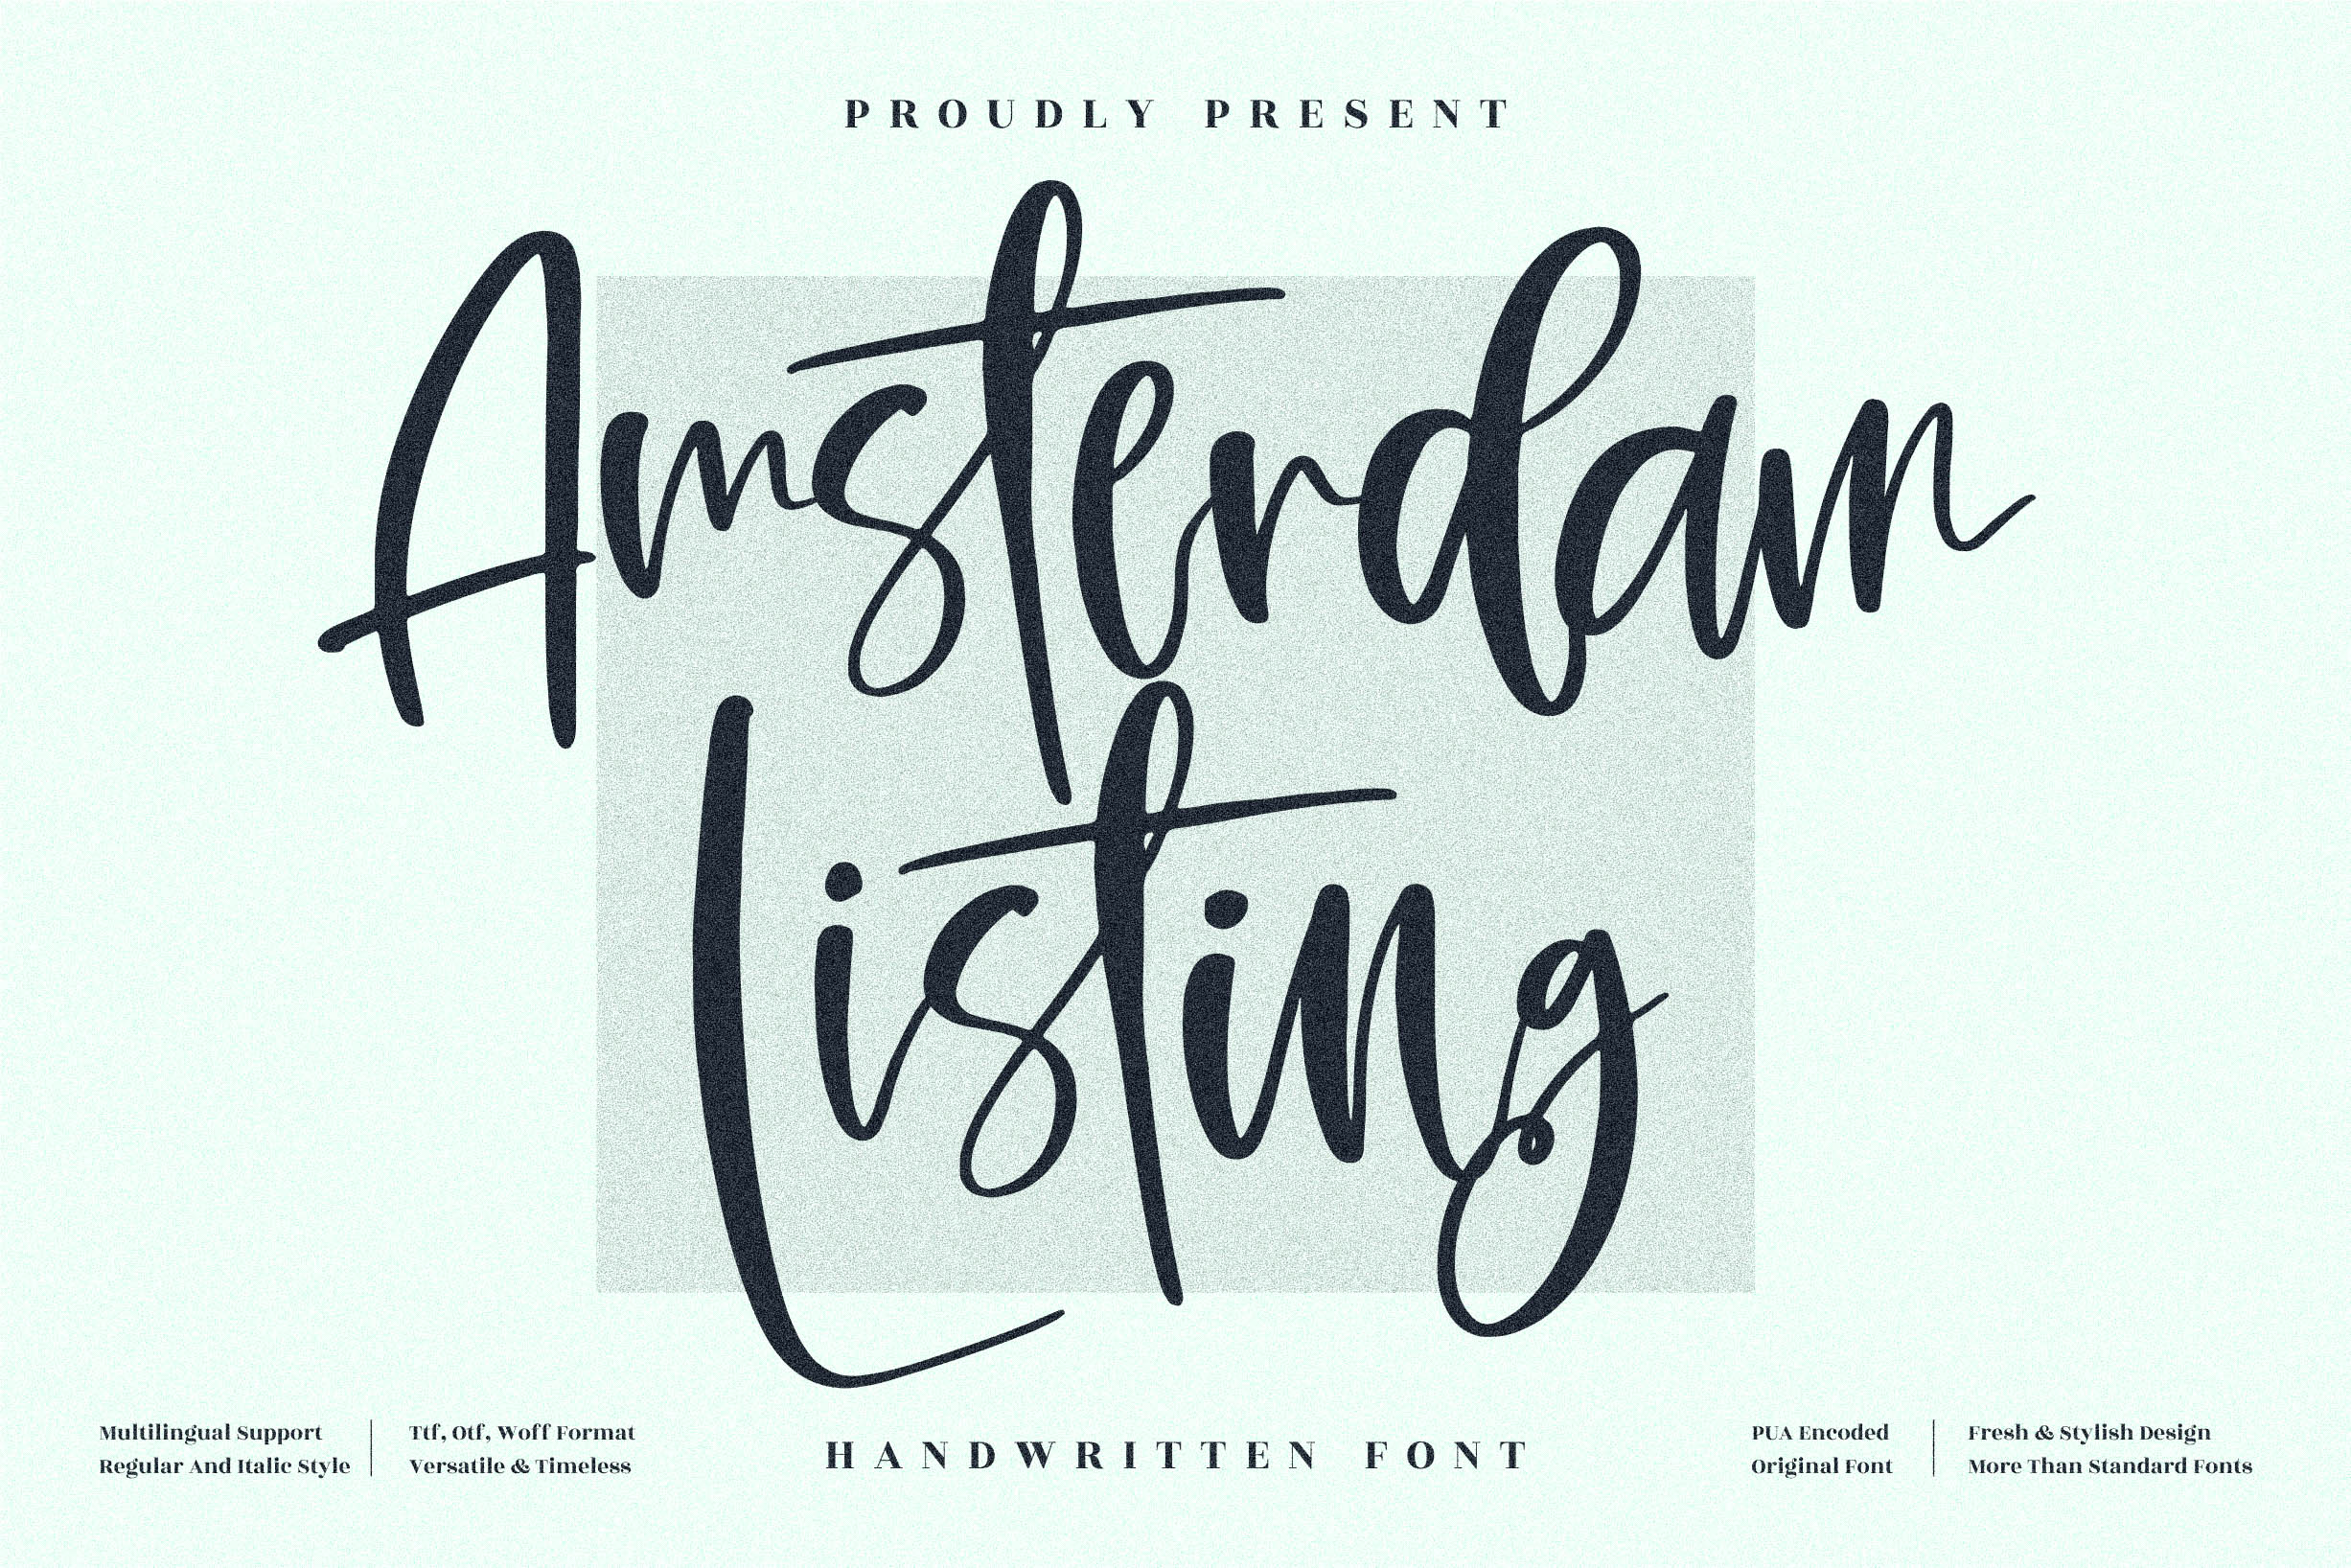 Amsterdam Listing Script Font